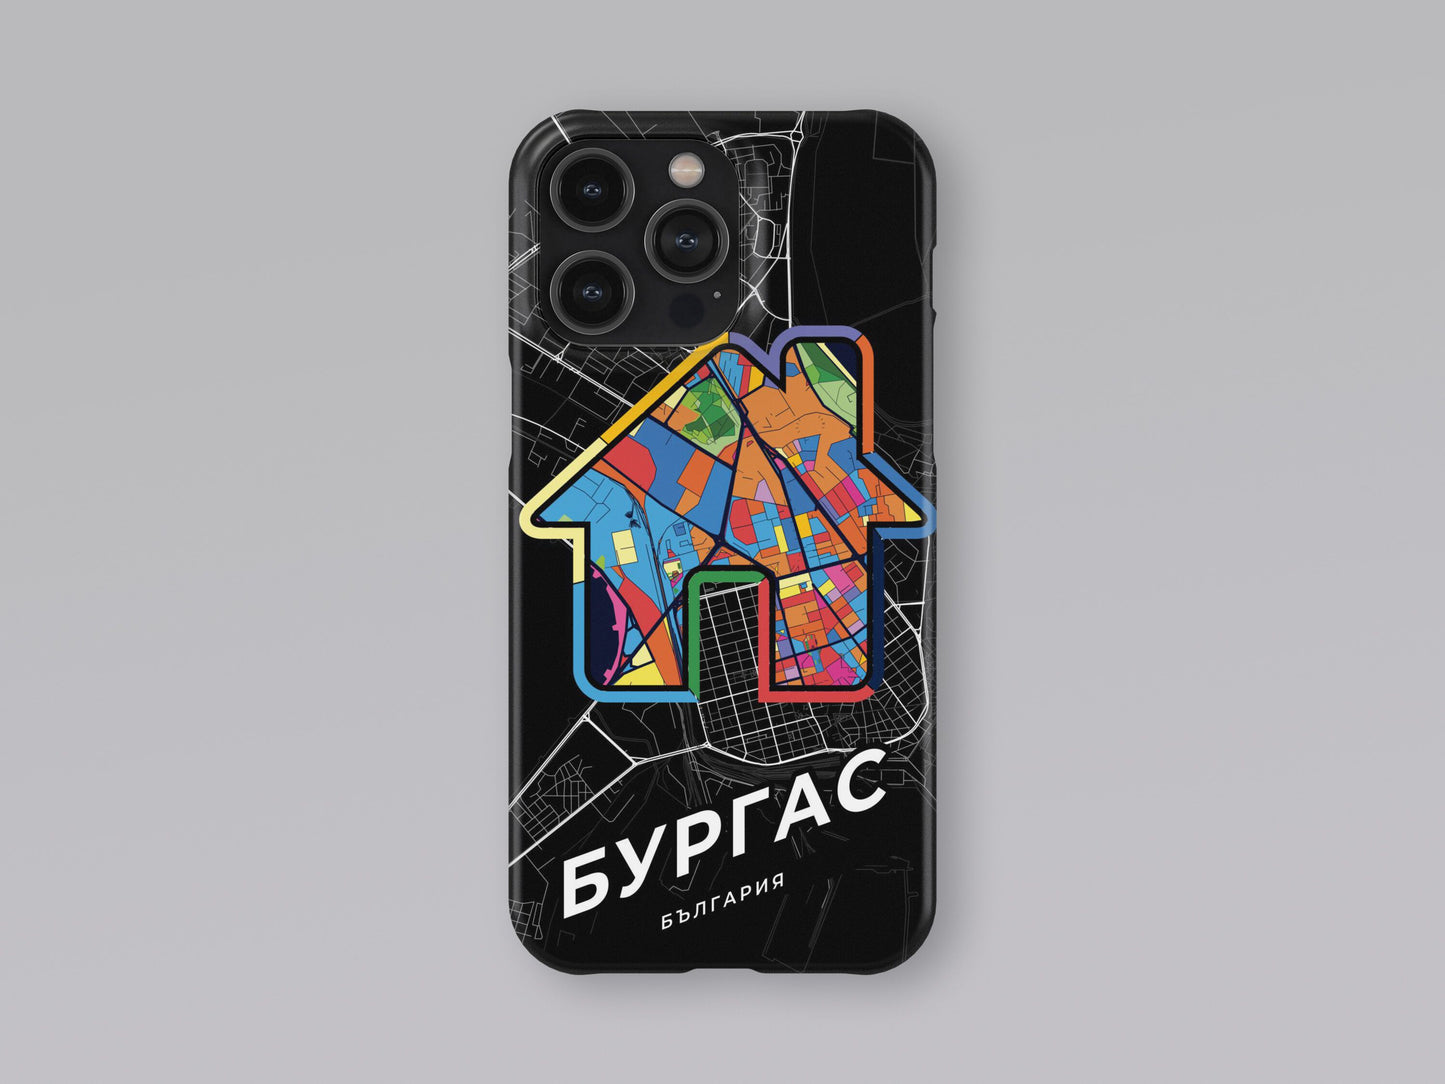 Бургас България slim phone case with colorful icon 3